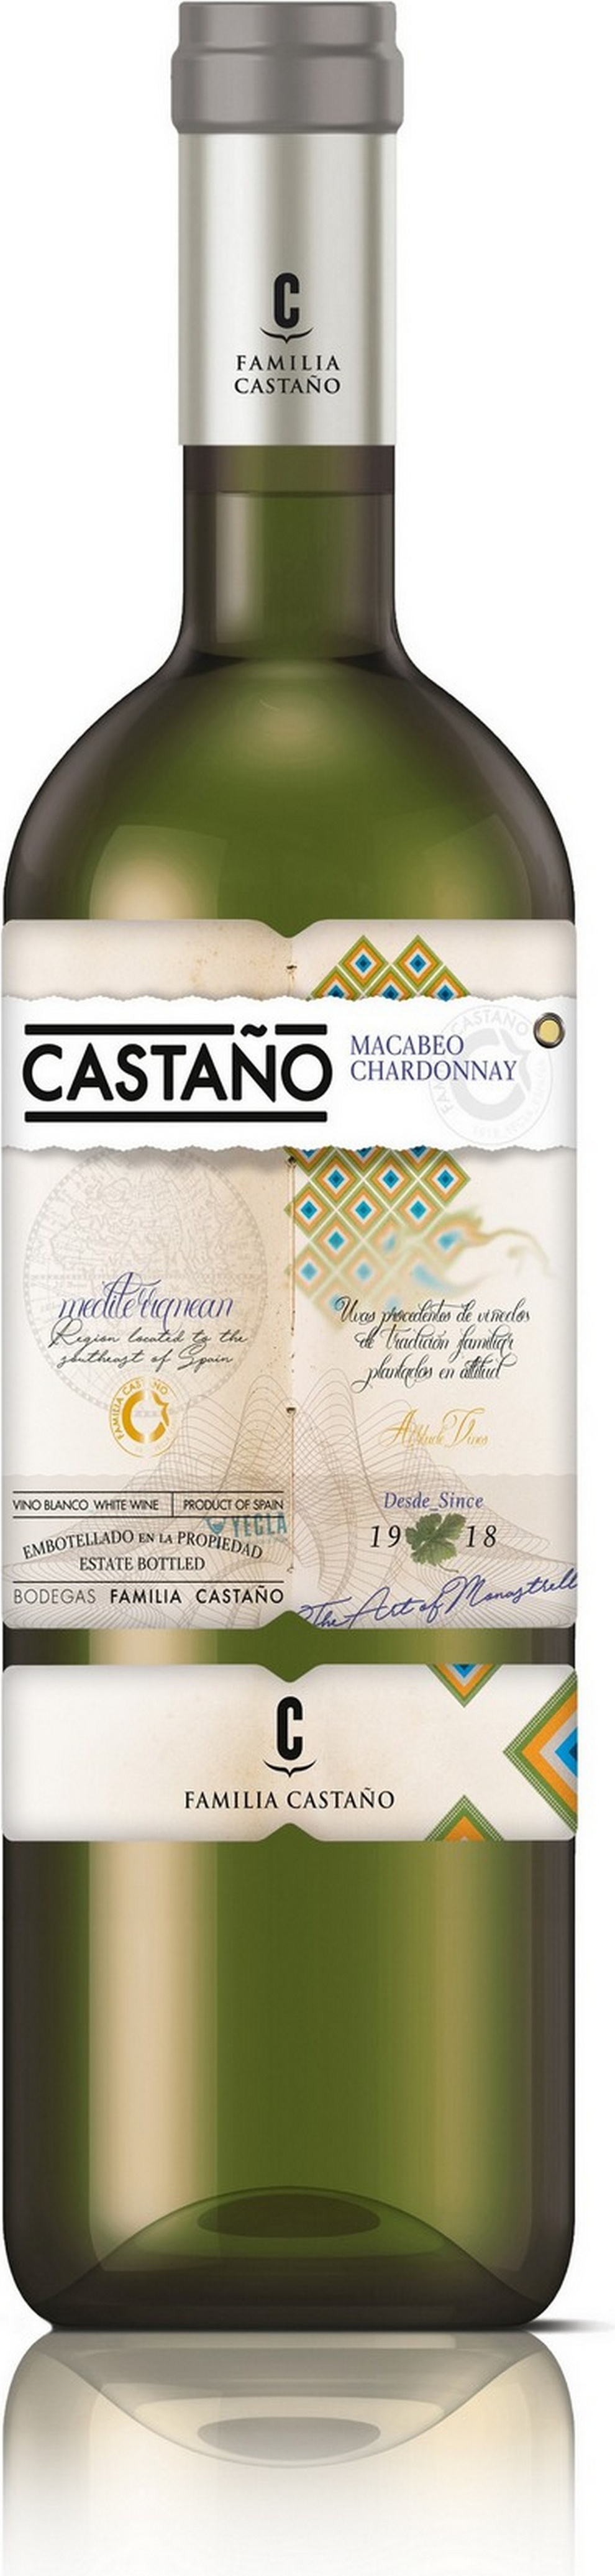 castano-macabeo-chardonnay-2019